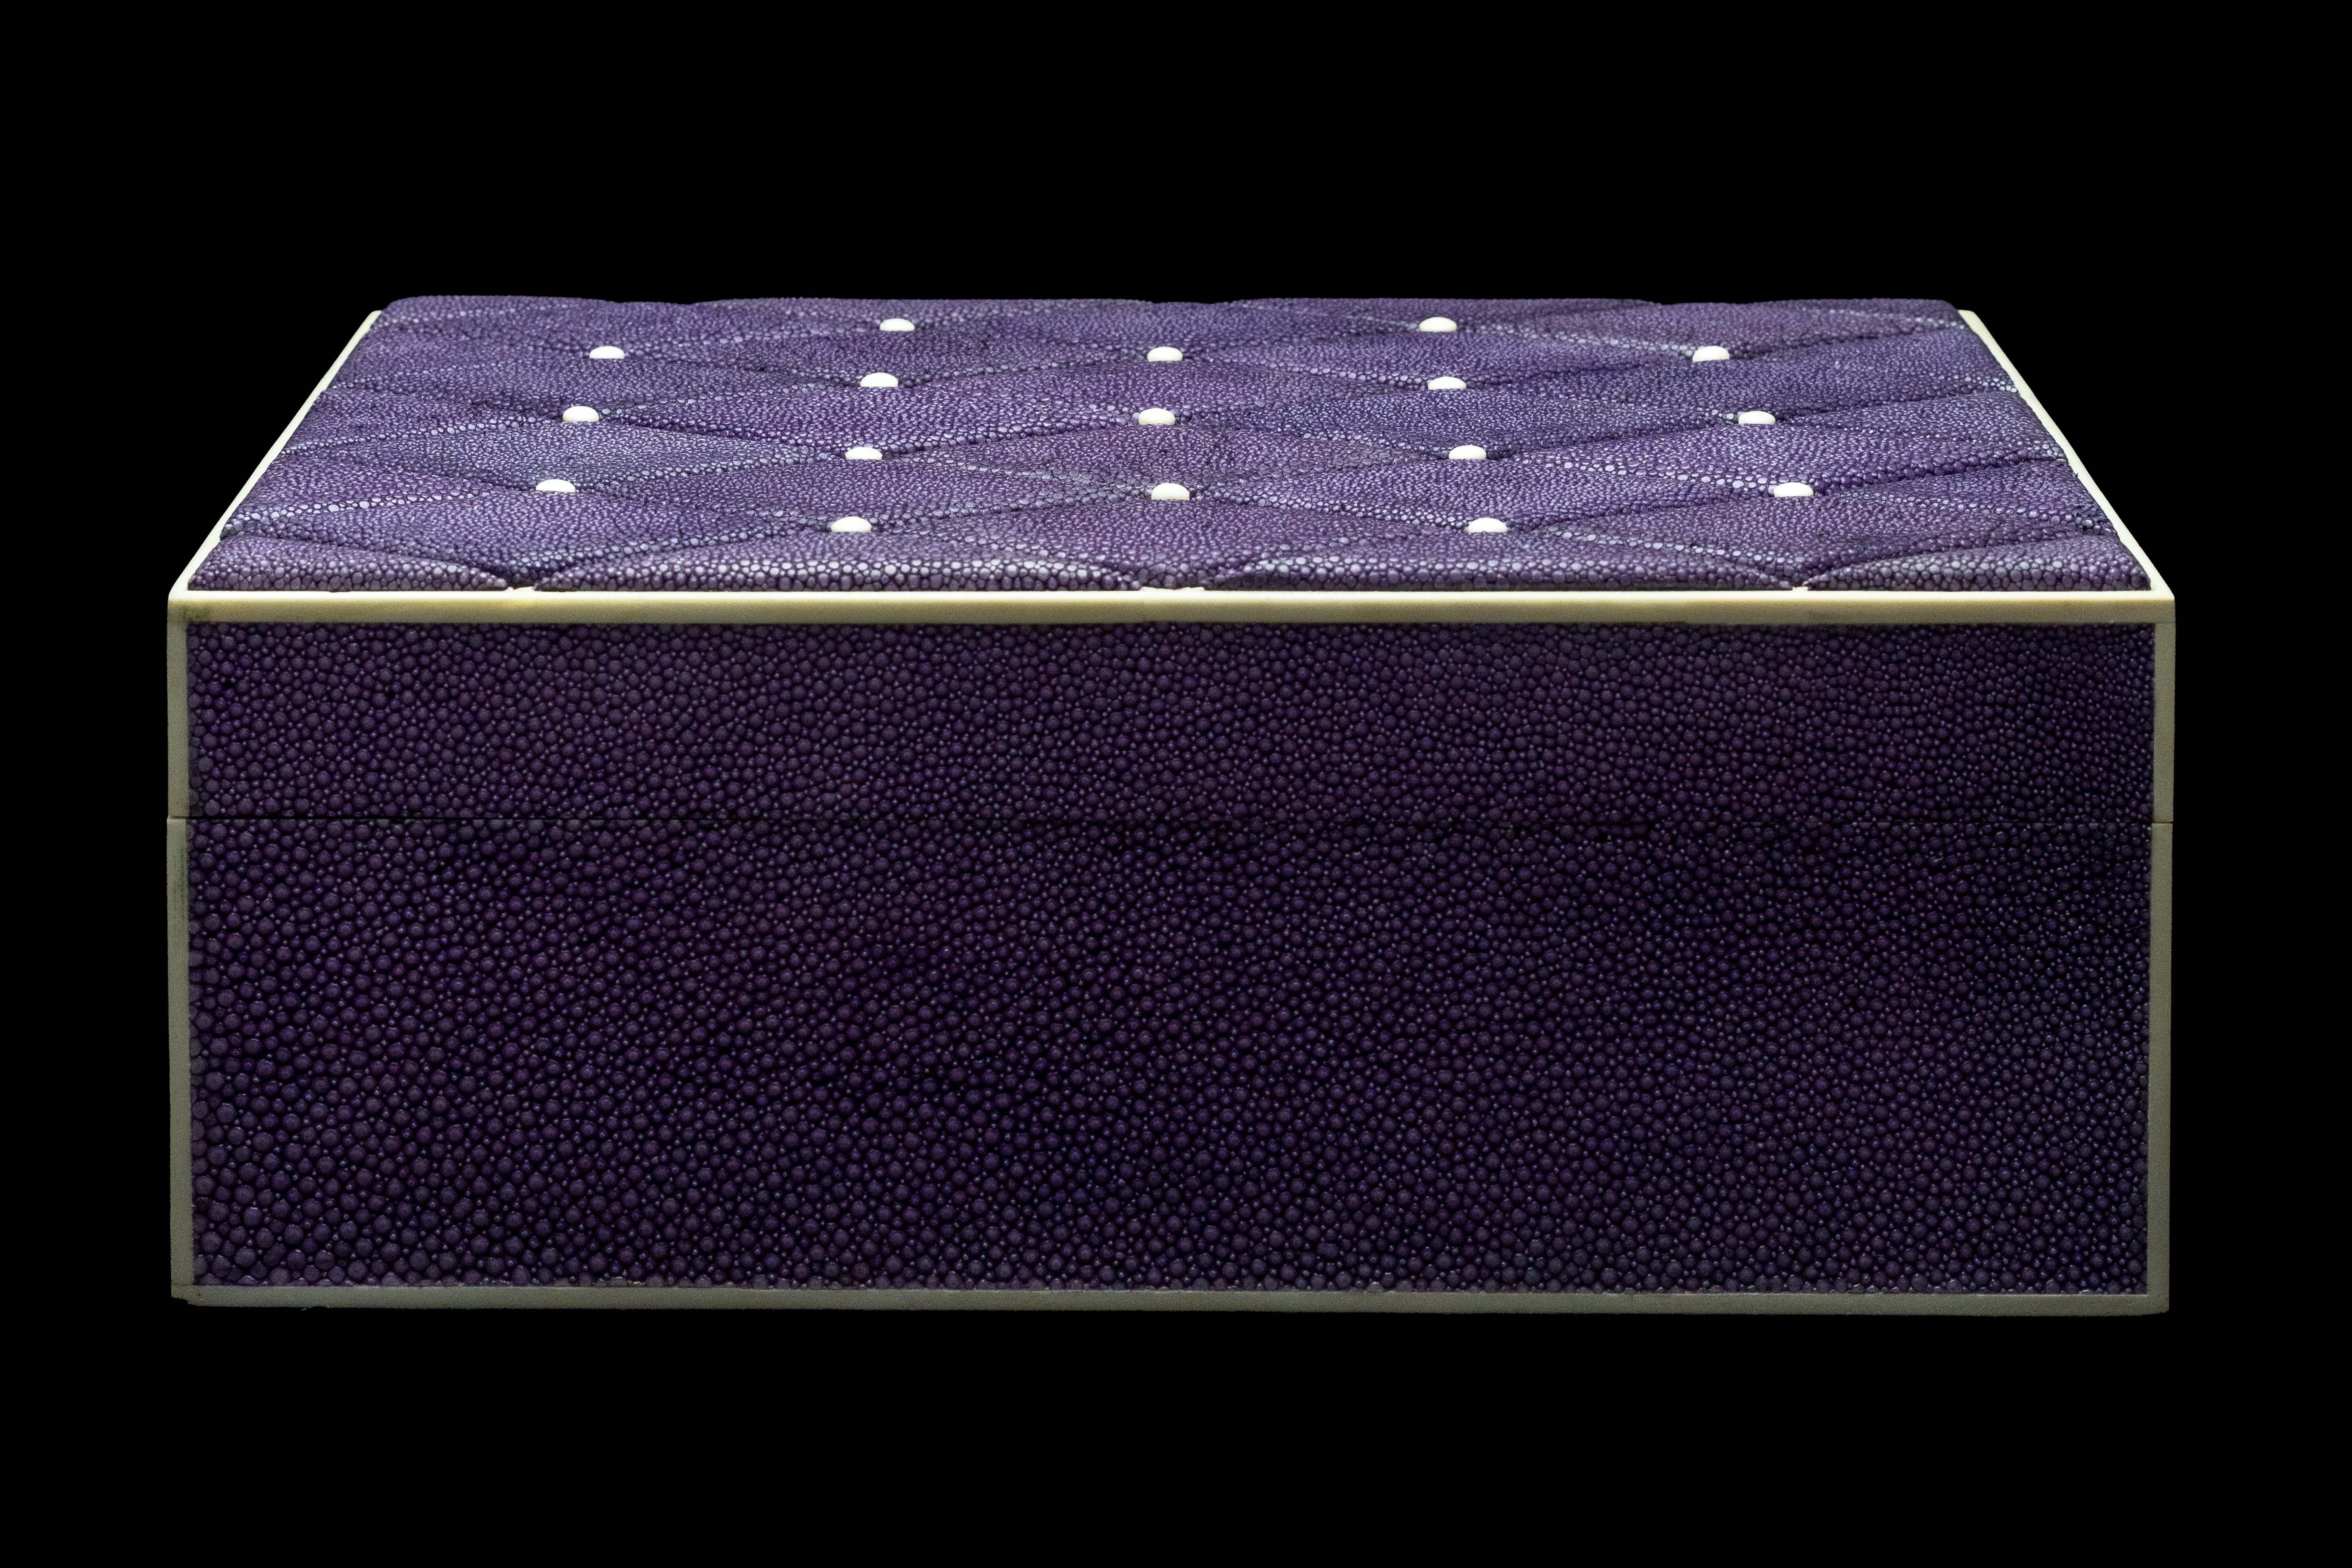 Purple diamond shagreen box w/ bone trim

Measures Approximately: 11